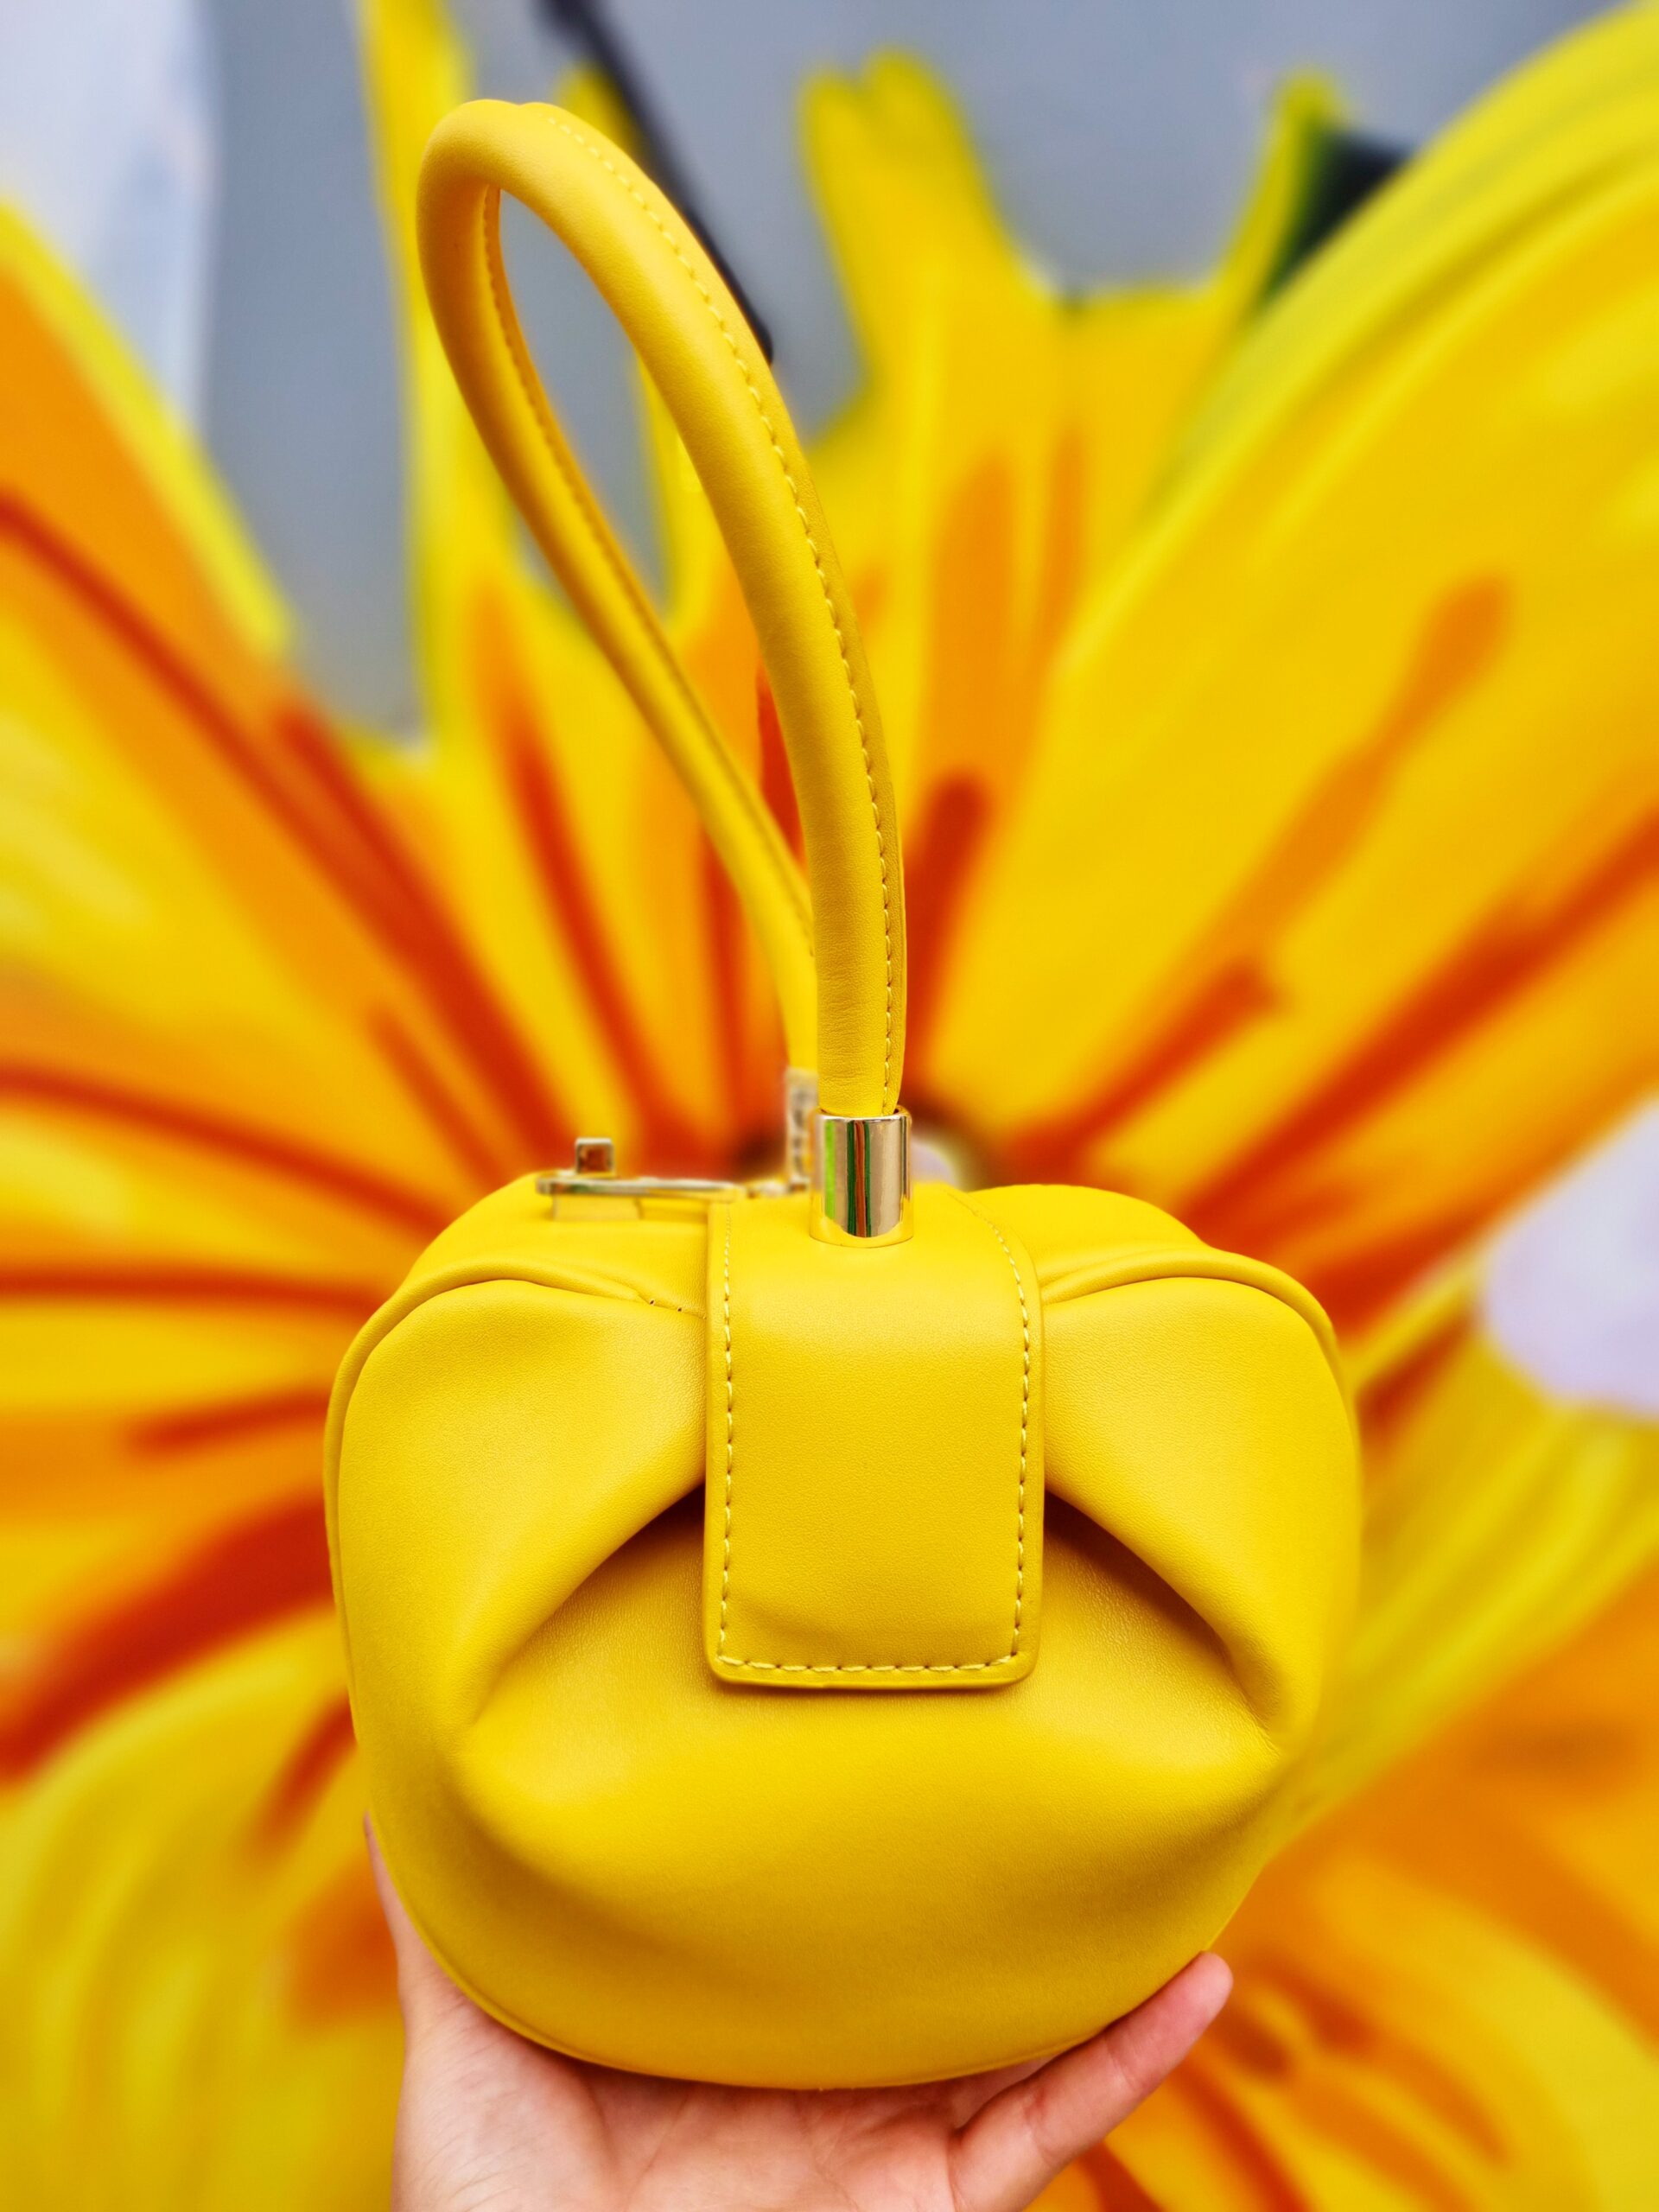 <img src="totes luxe.jpg" alt="totes luxe vegan yellow handbag"/>